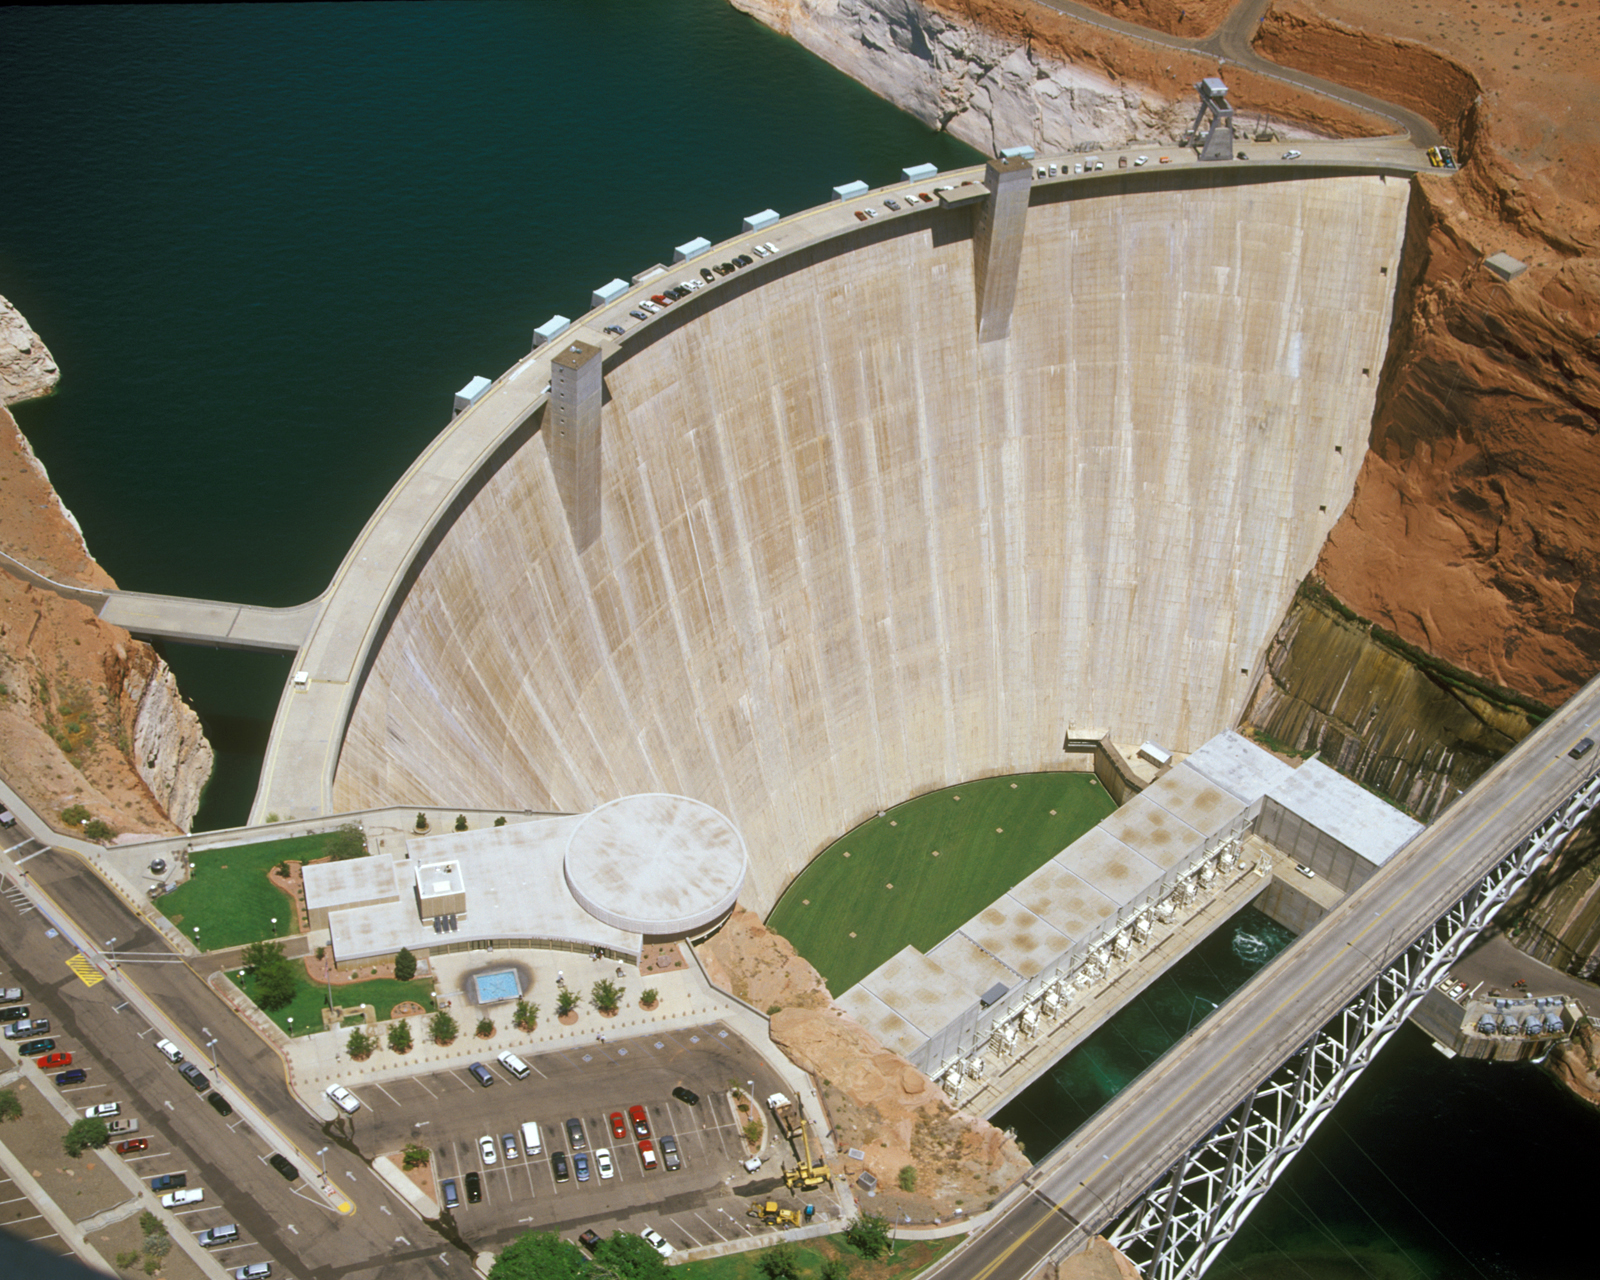 Glen Canyon Dam and Powerplant